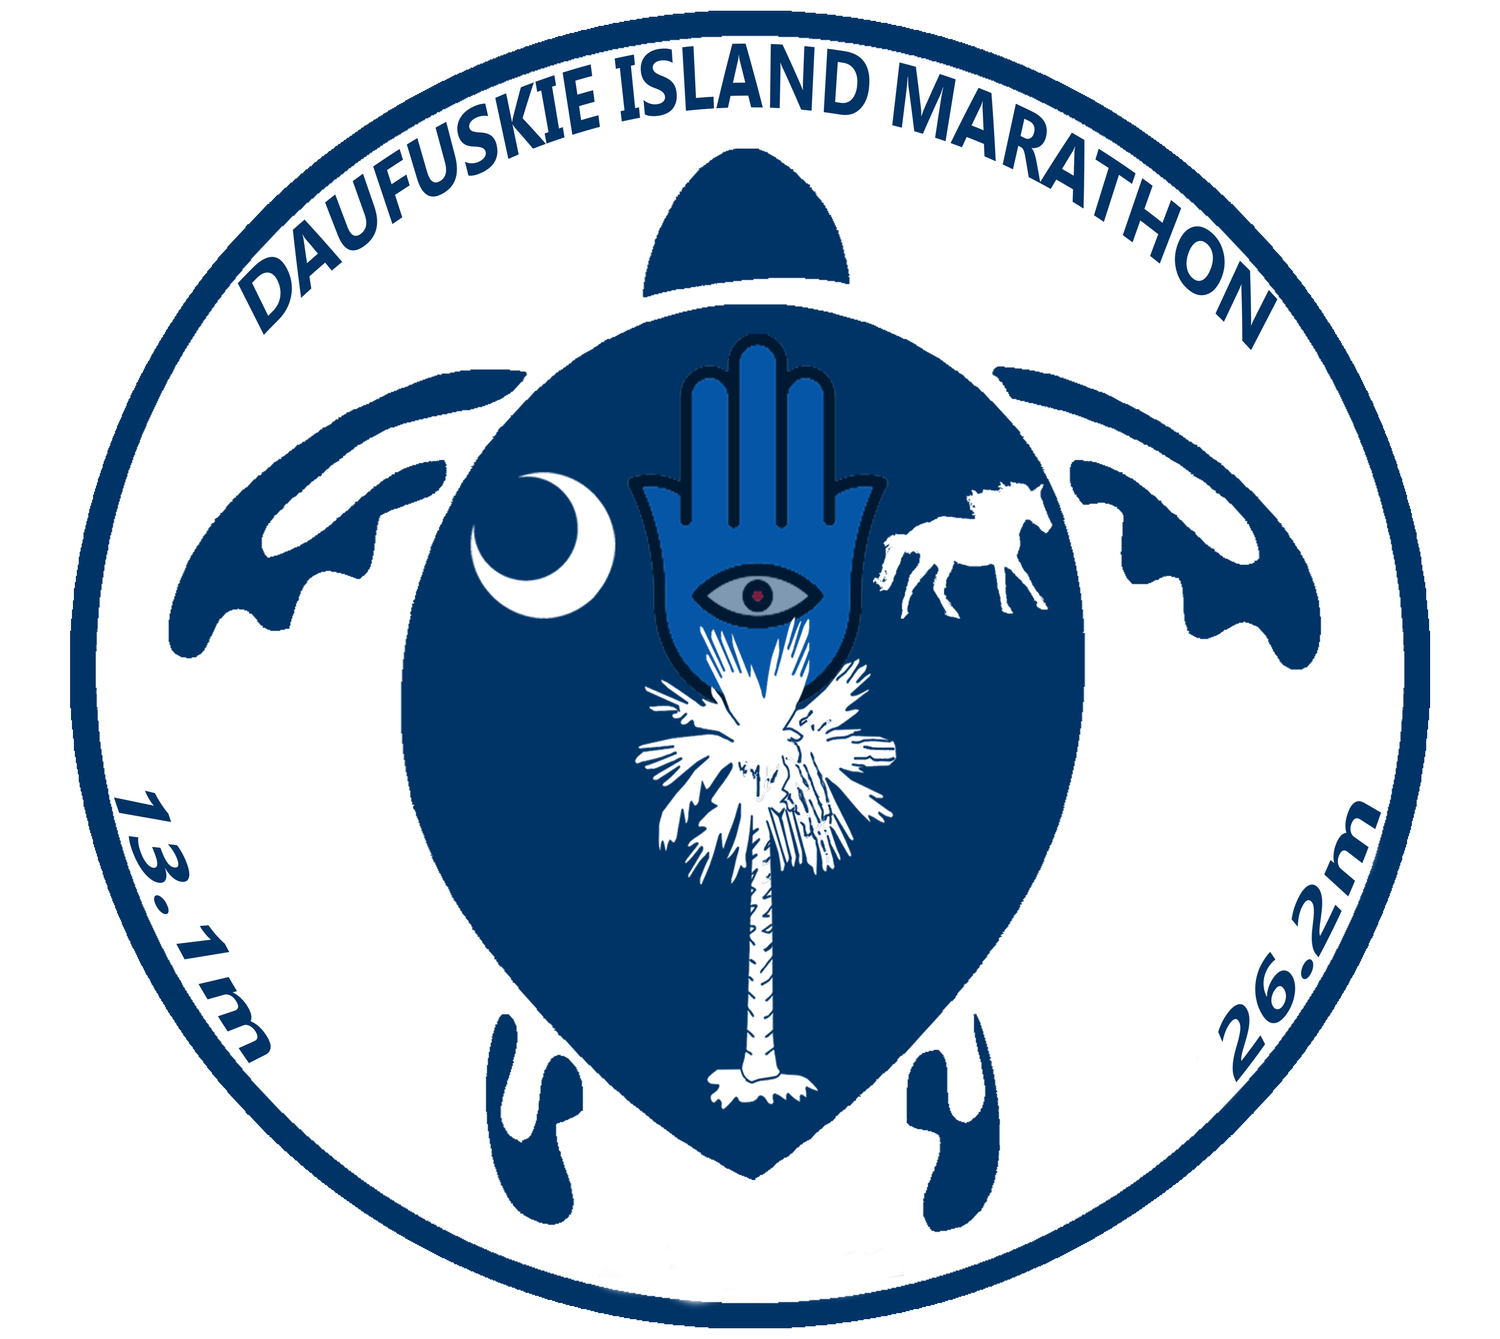 Daufuskie Island Marathon